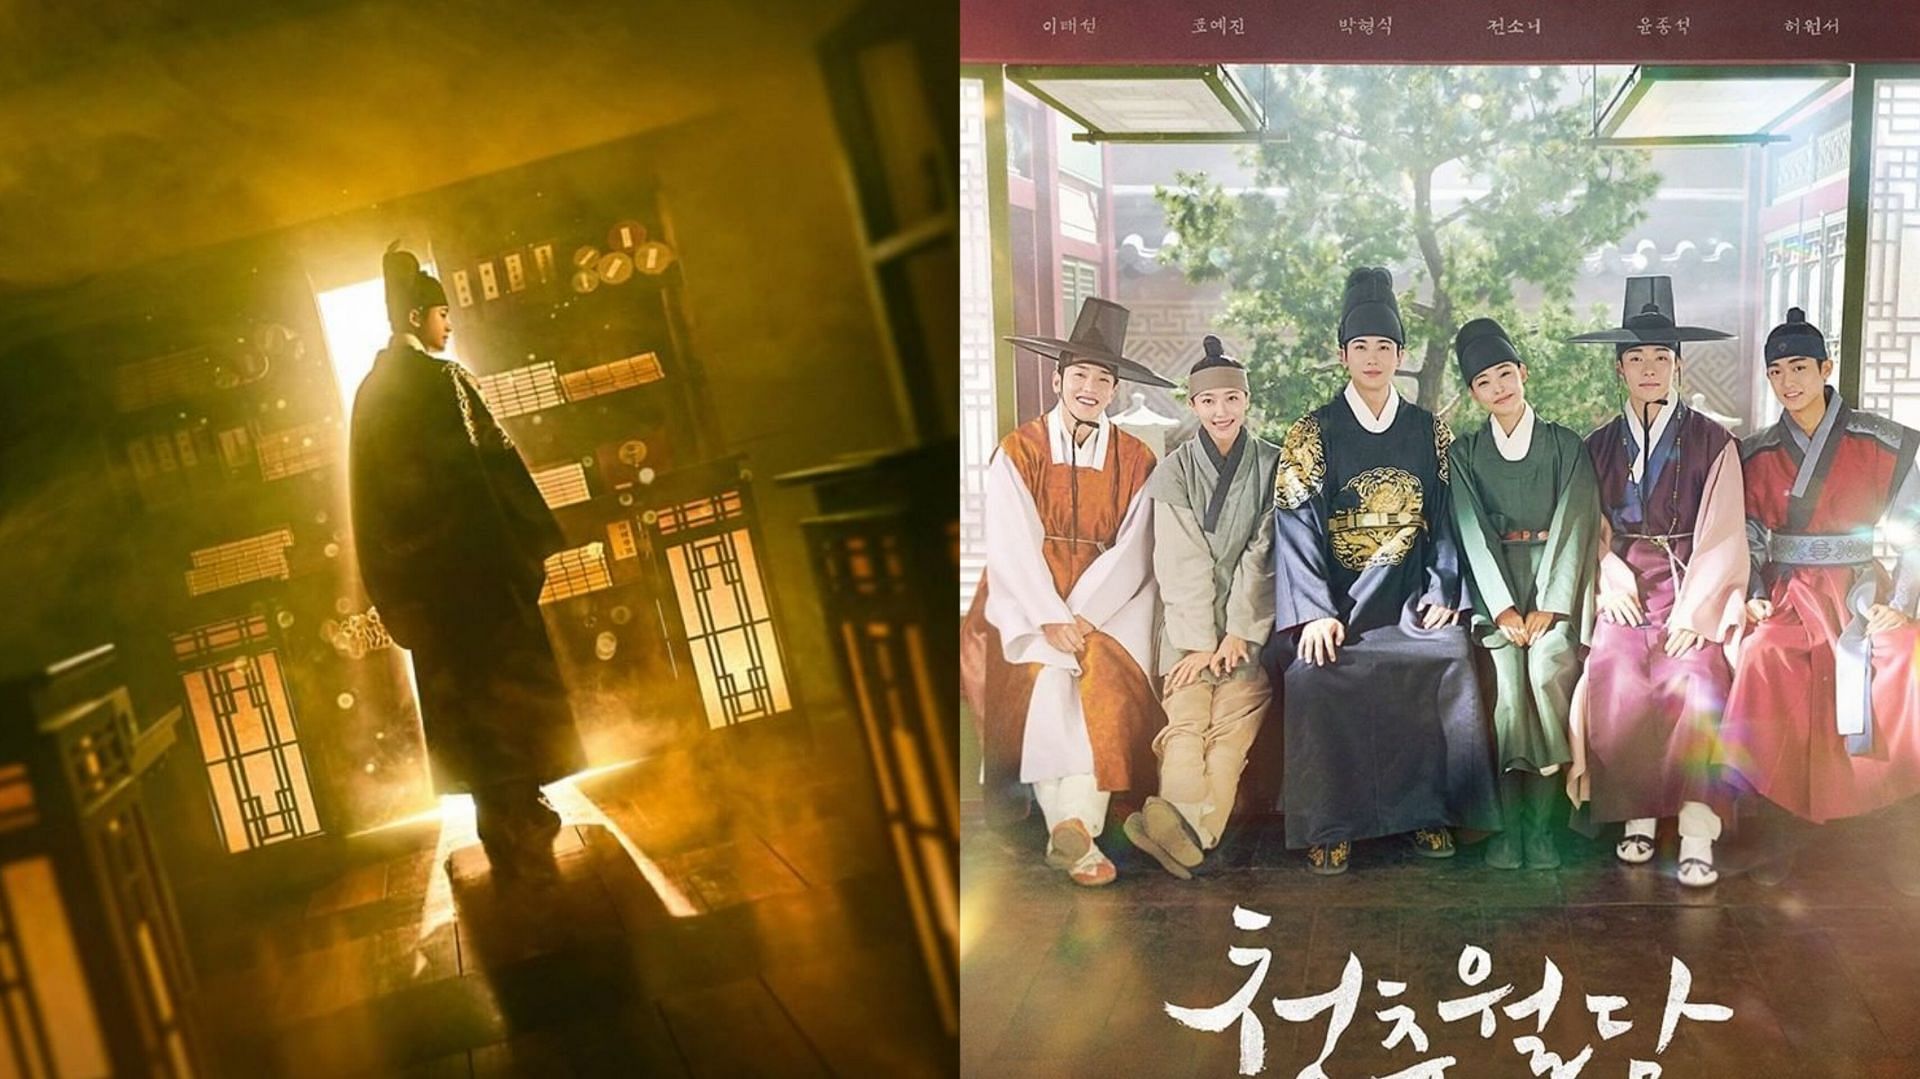 Featuring Park Hyung-sik, Jeon So-nee, Pyo Ye-jin, Yoon Jong-seok, Lee Tae-sun and Heo Won-seo.(Image via tvN)